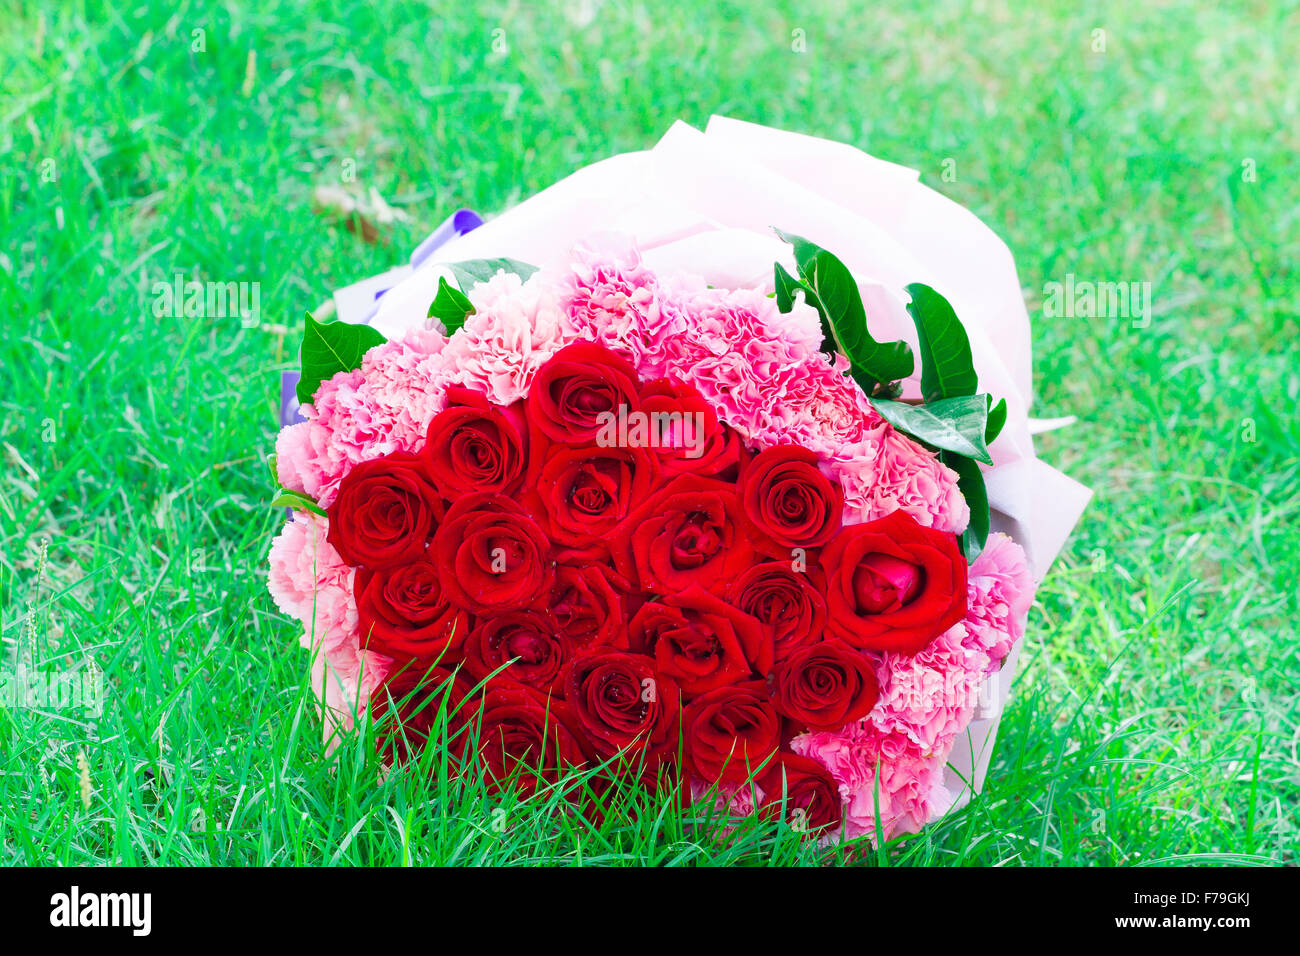 Rose rosse e garofano rosa su erba verde Foto Stock